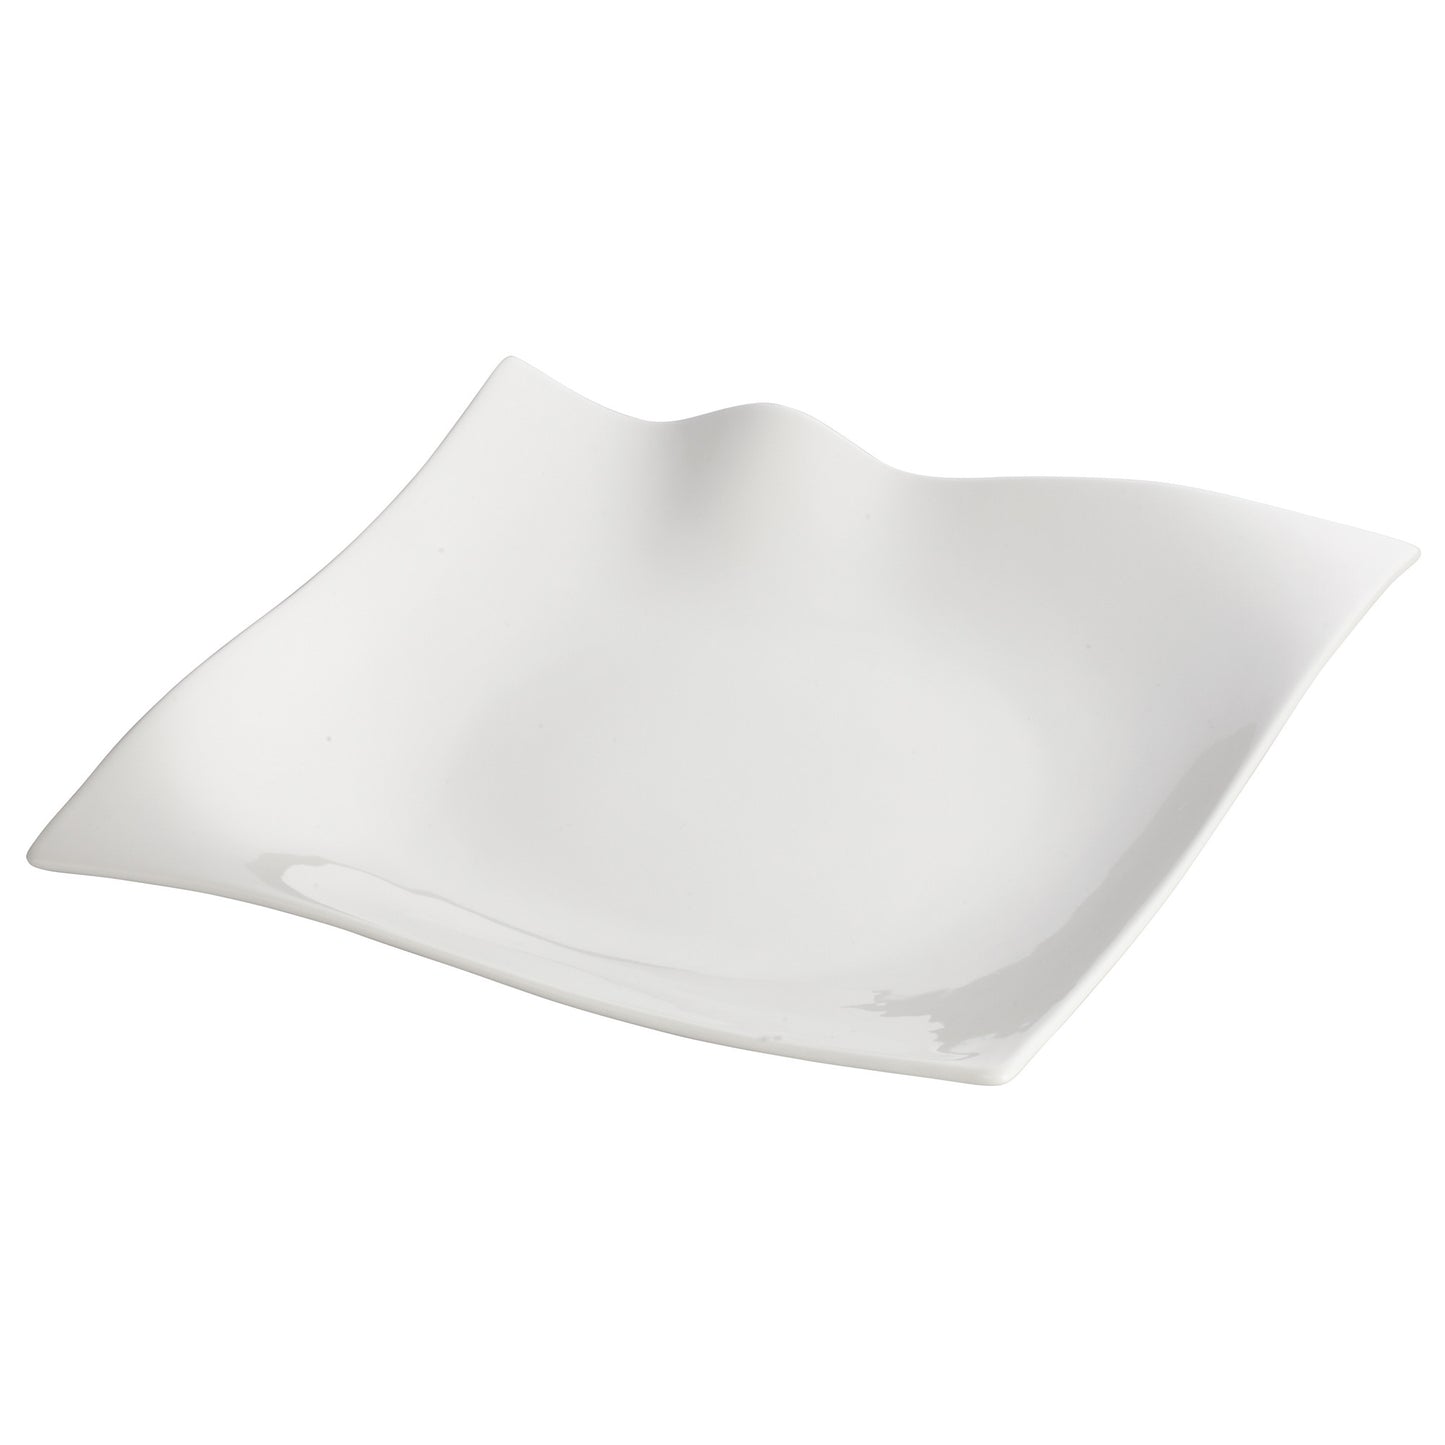 9"Sq Porcelain Square Plate, Bright White, 12 pcs/case